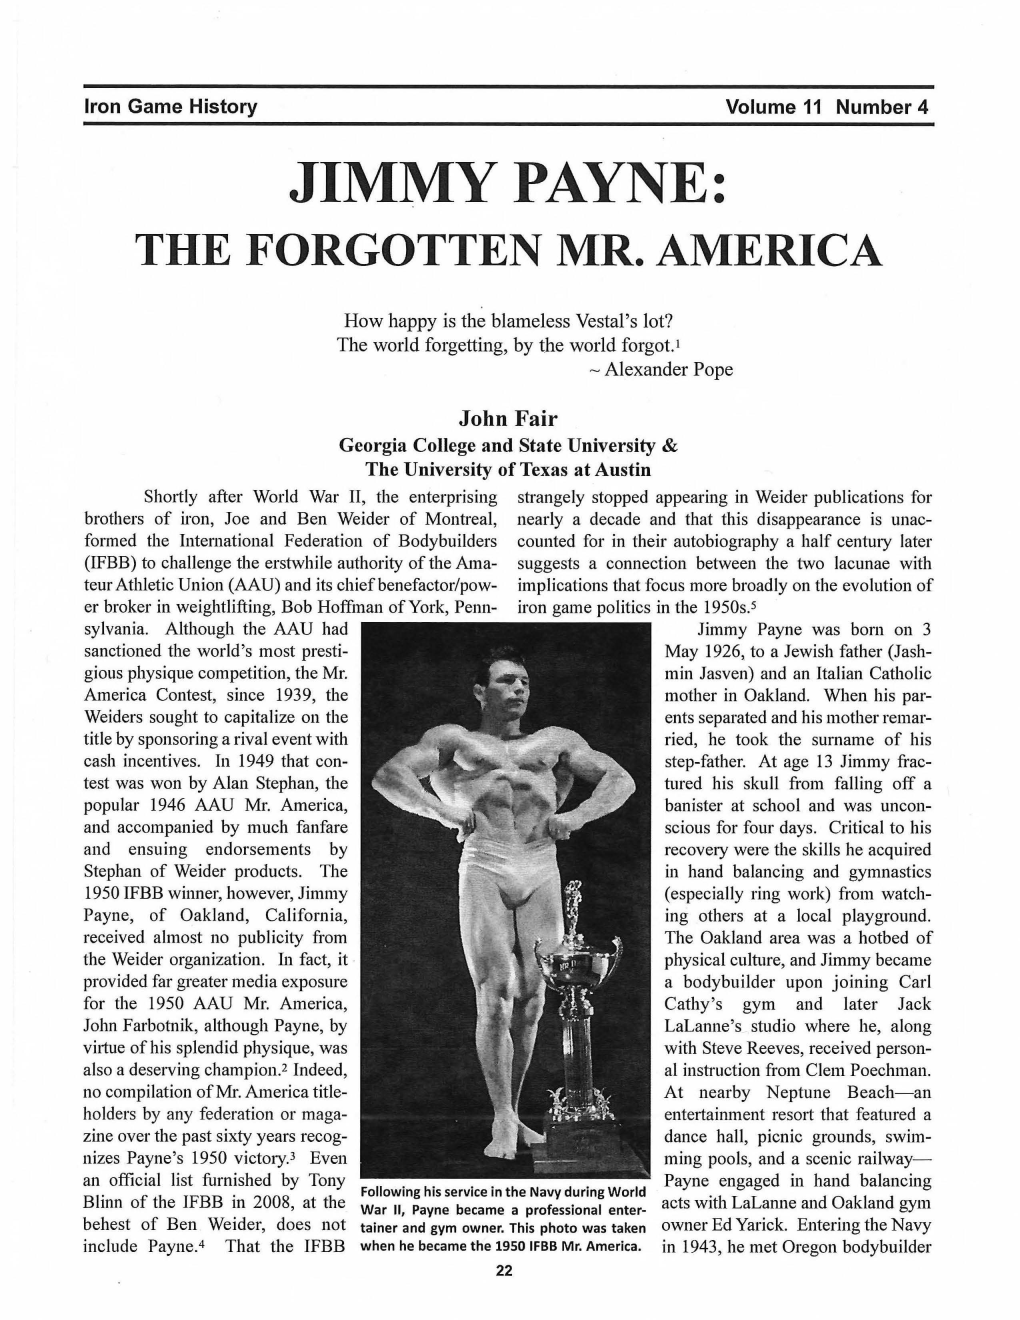 Jimmy Payne: the Forgotten Mr. America